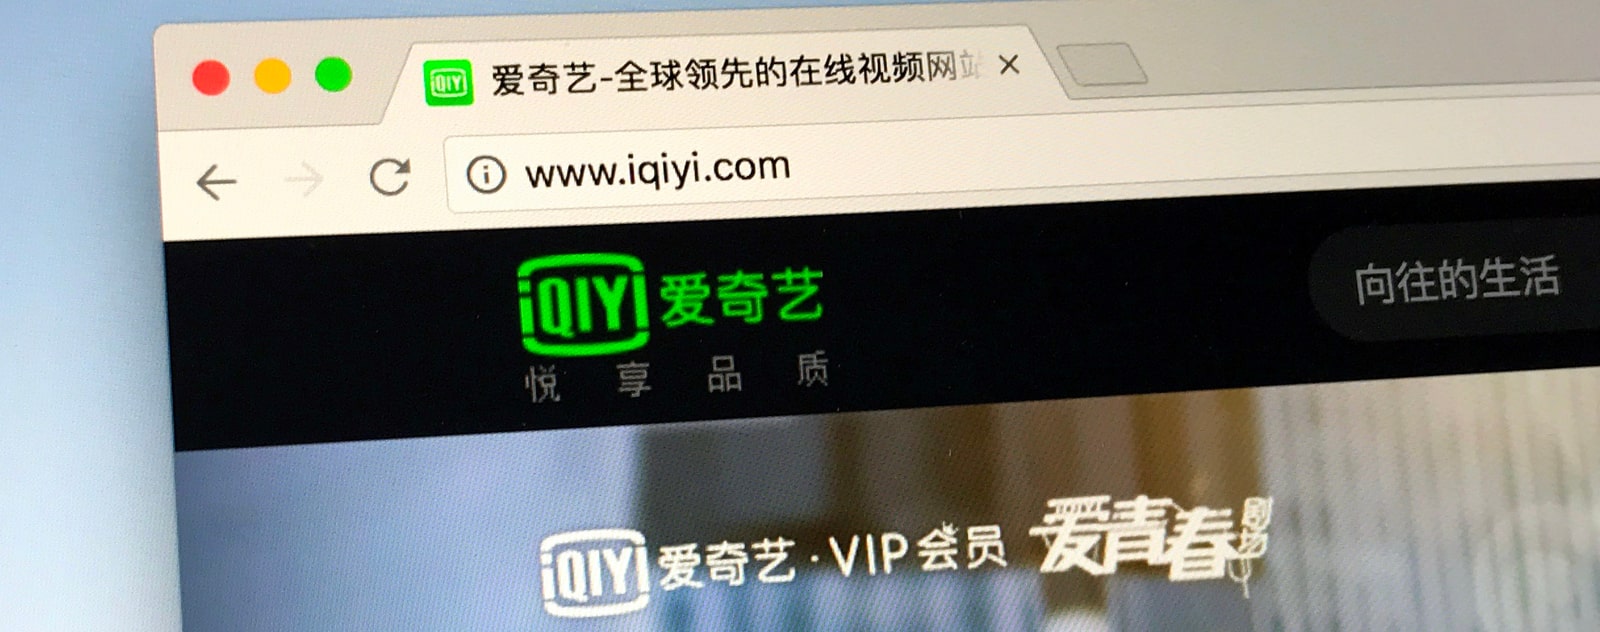 iqiyi-browser